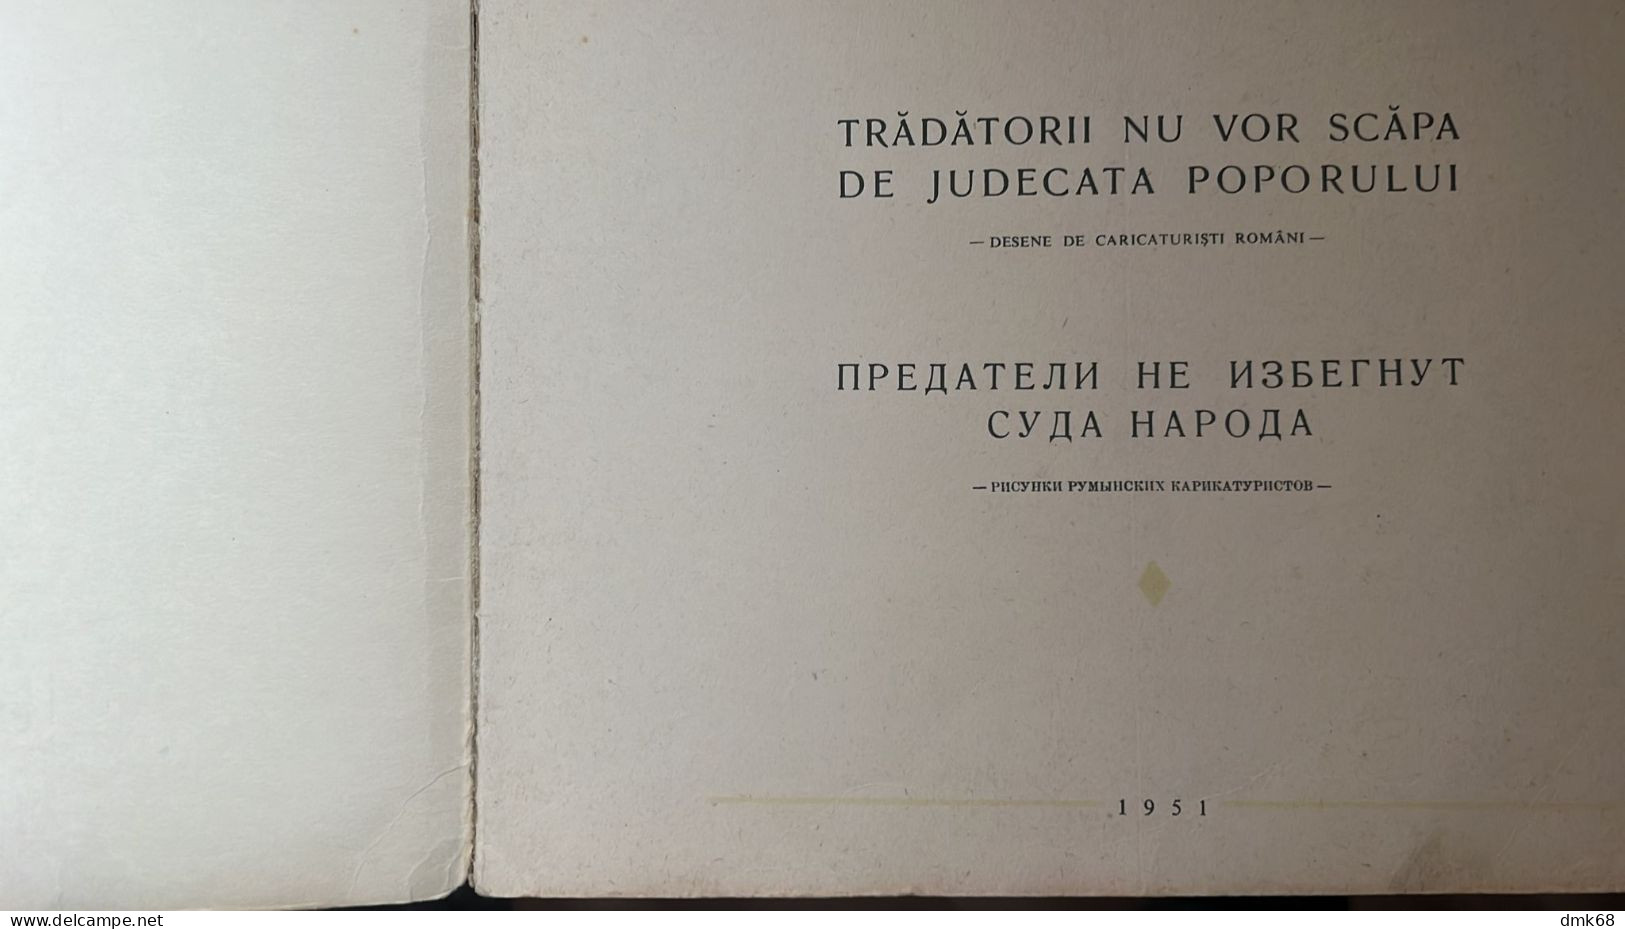 ROMANIA - TRADATORII NU VOR SCAPA DE JUDECATA POPORULAI - AGAINST TITO / YUGOSLAVIA - ILLUSTRATED - 1951 - RARE - Livres Anciens